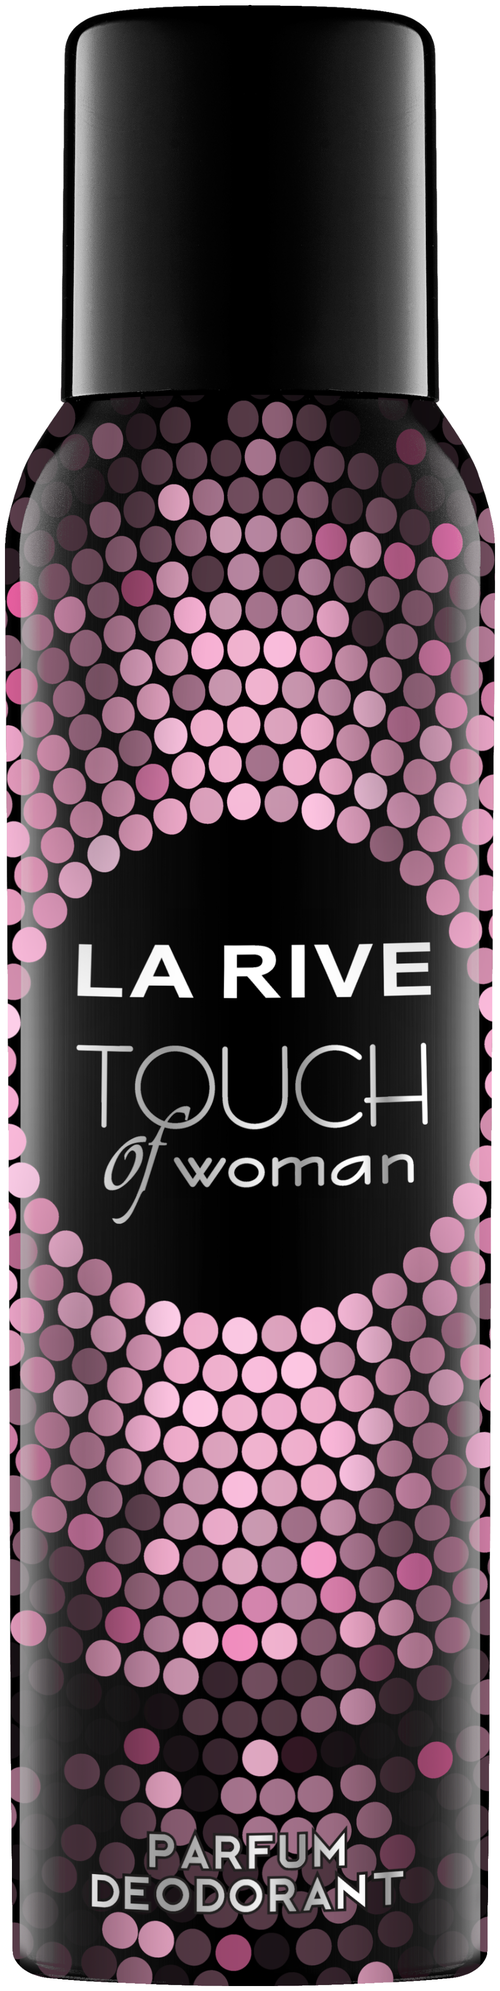 La Rive Дезодорант Touch of Woman, спрей, 150 мл